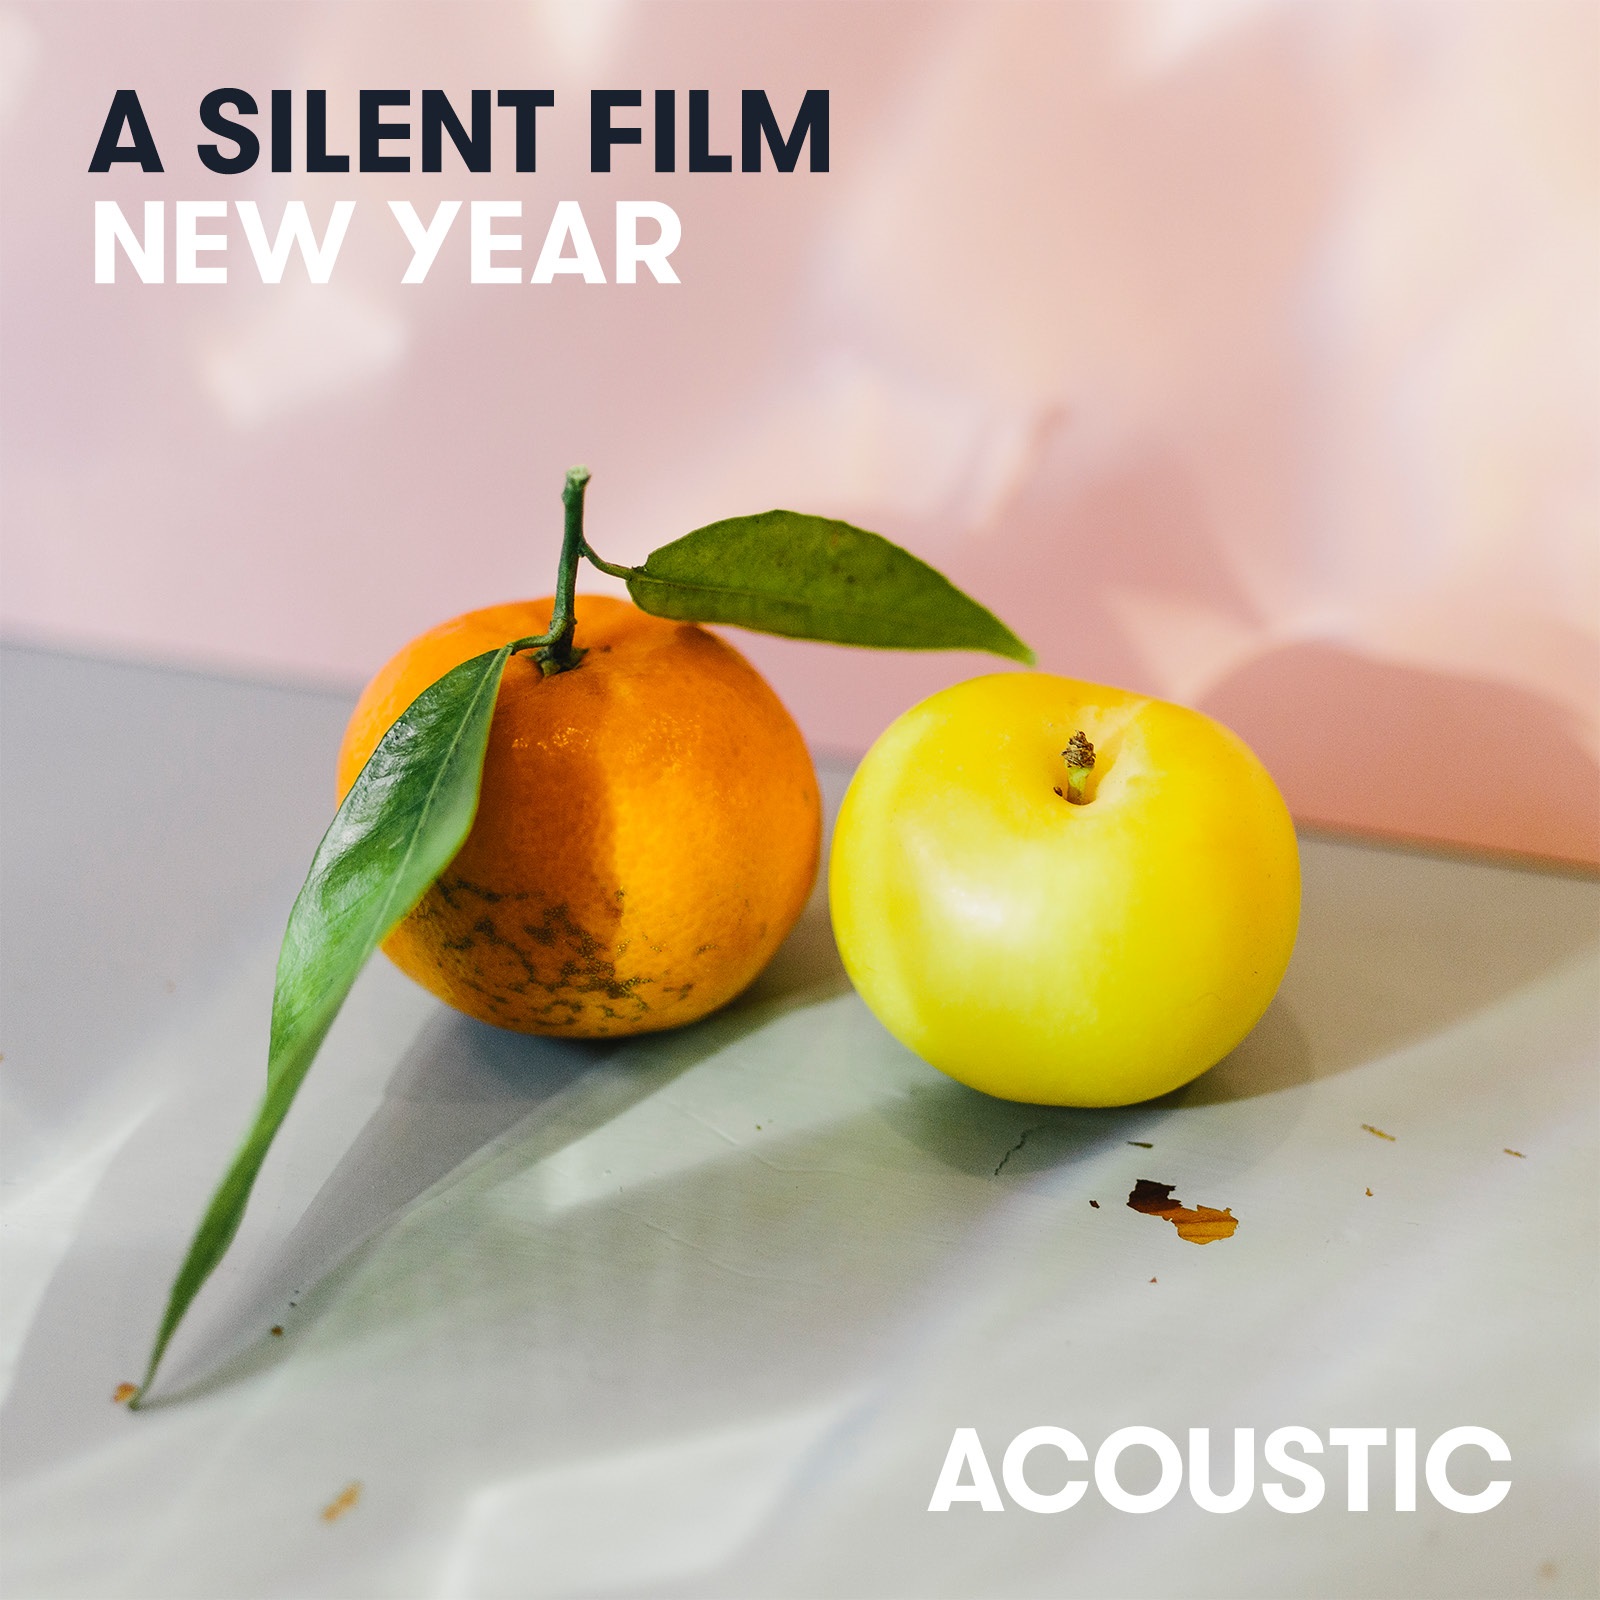 http://noisetrade.com/asilentfilm/new-year-acoustics-ep